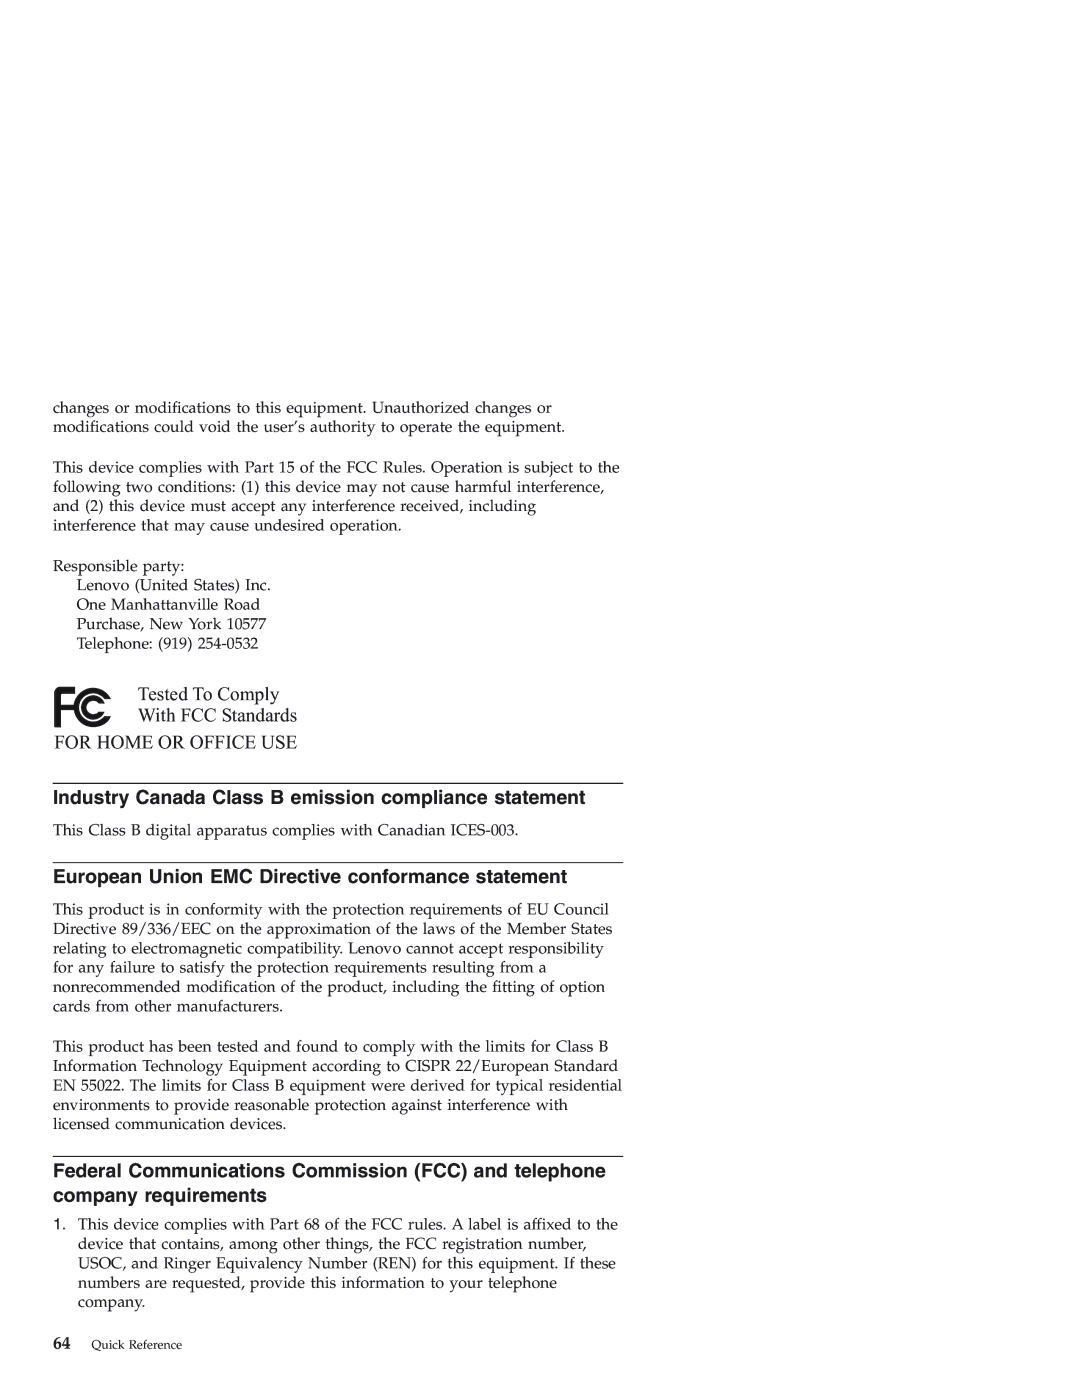 Lenovo 3000 J Industry Canada Class B emission compliance statement, European Union EMC Directive conformance statement 